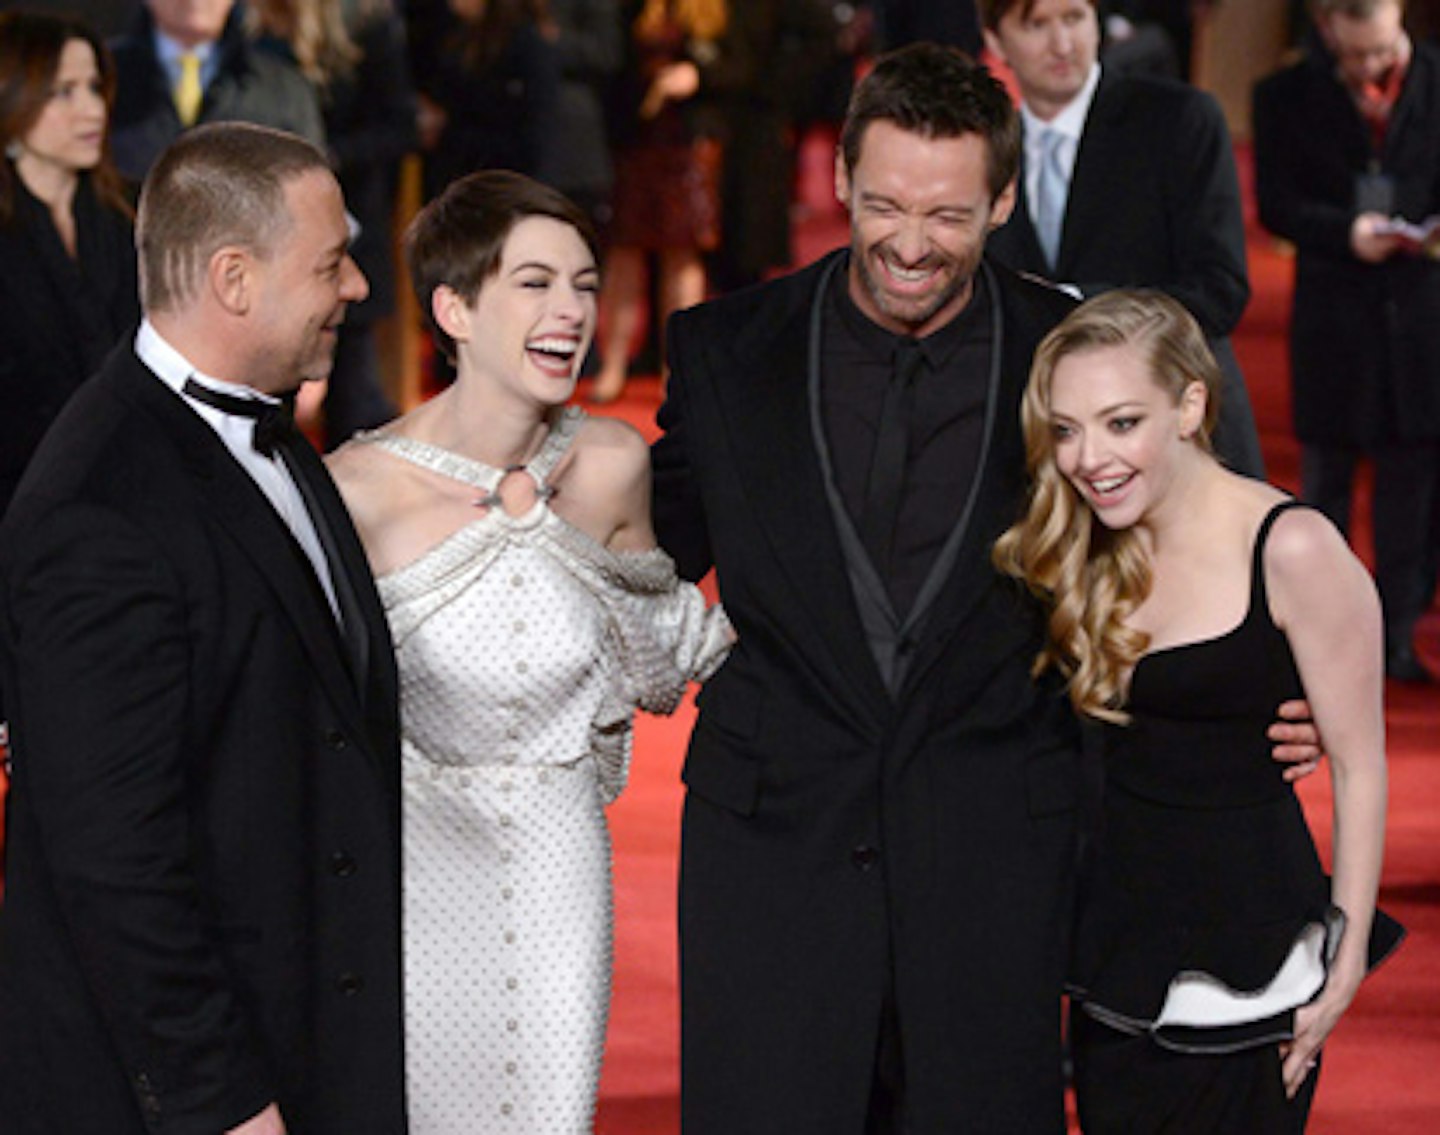 Les Miserable Premiere- Russell Crowe, Anne Hathaway, Hugh Jakcman and Amanda Seyfried